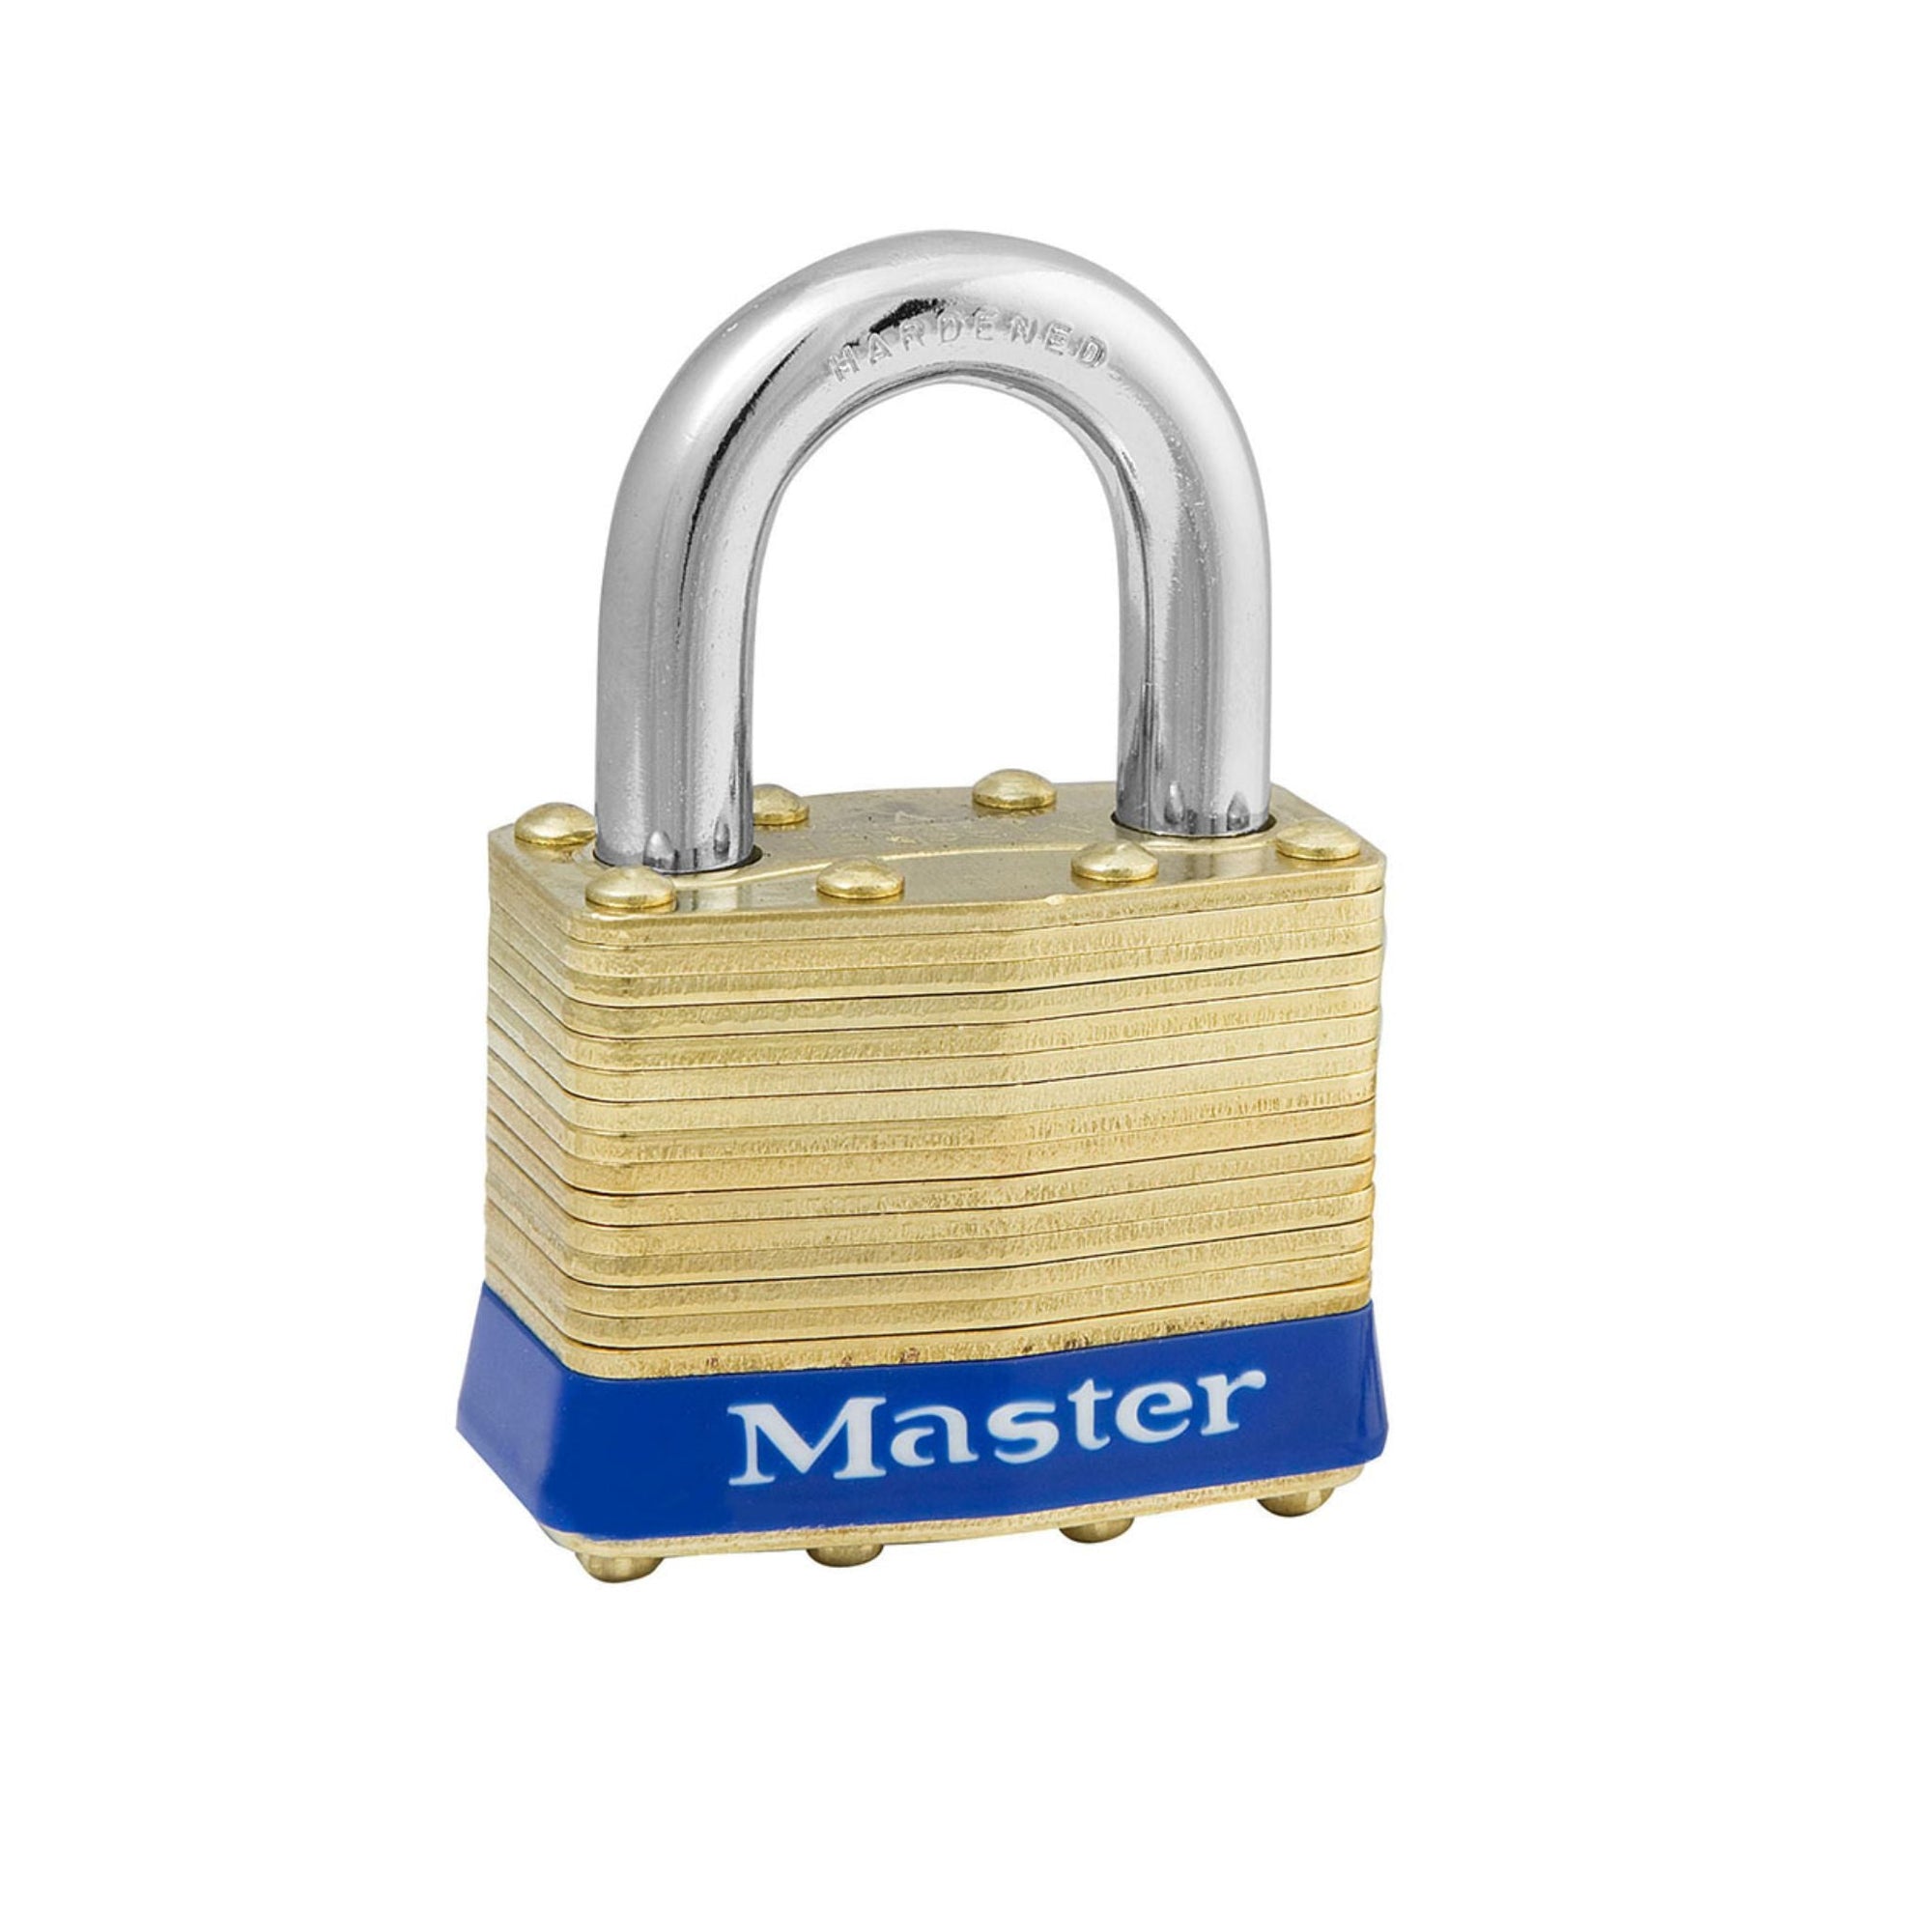 Master Lock 2KA 0322 Lock Laminated brass No. 2 Series Padlock Keyed to Match Existing Key Number KA0322 - The Lock Source